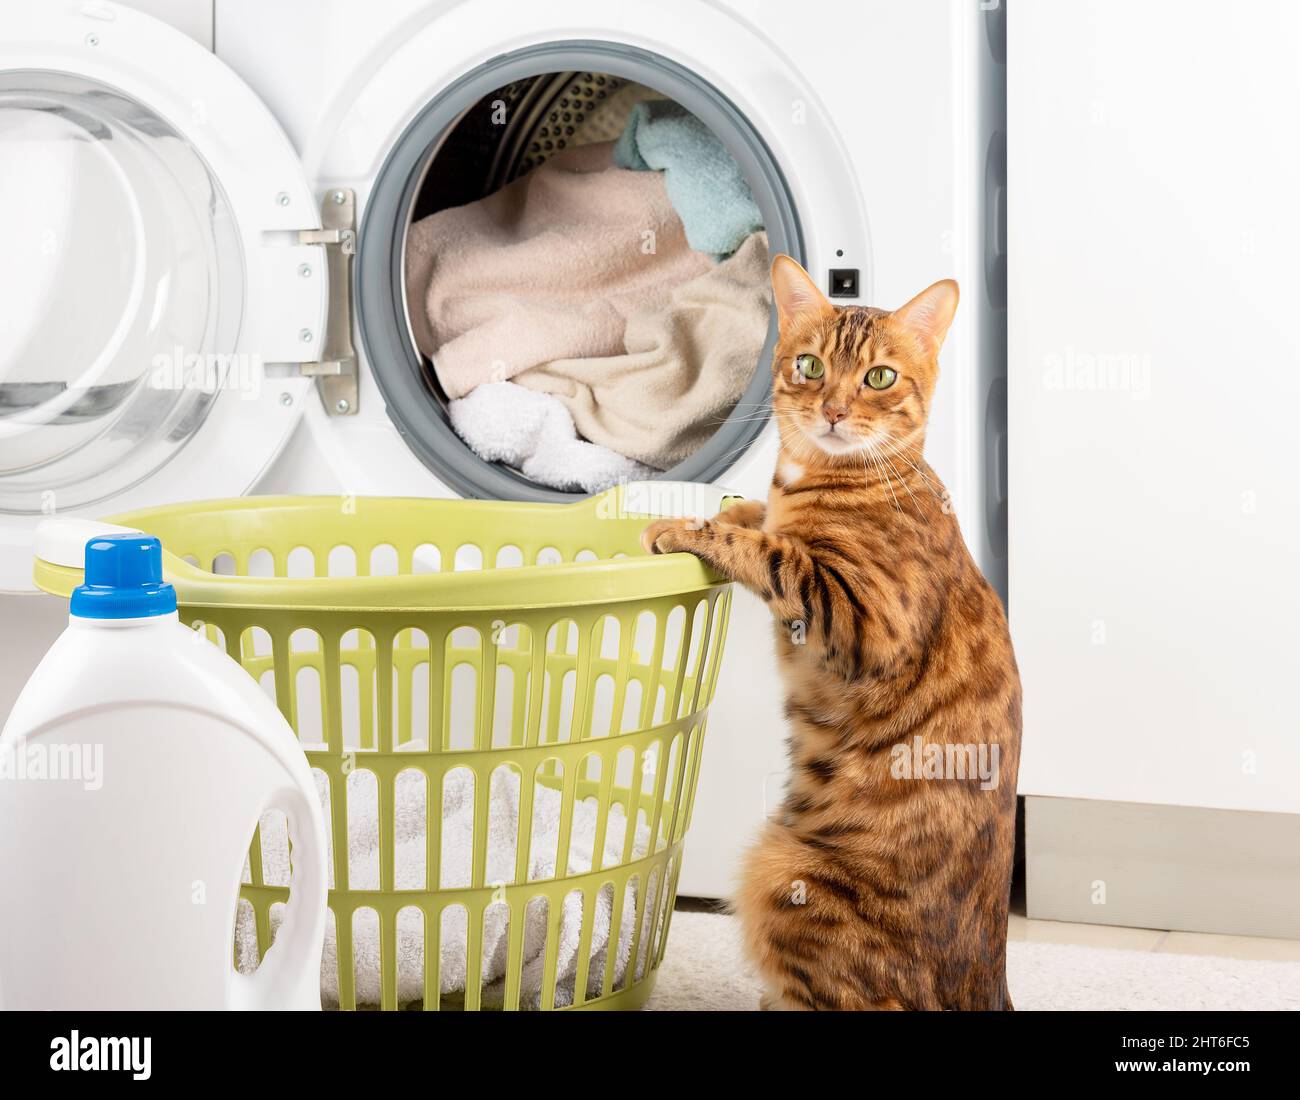 Funny cat washing dirty linen in a modern washing machine. Stock Photo